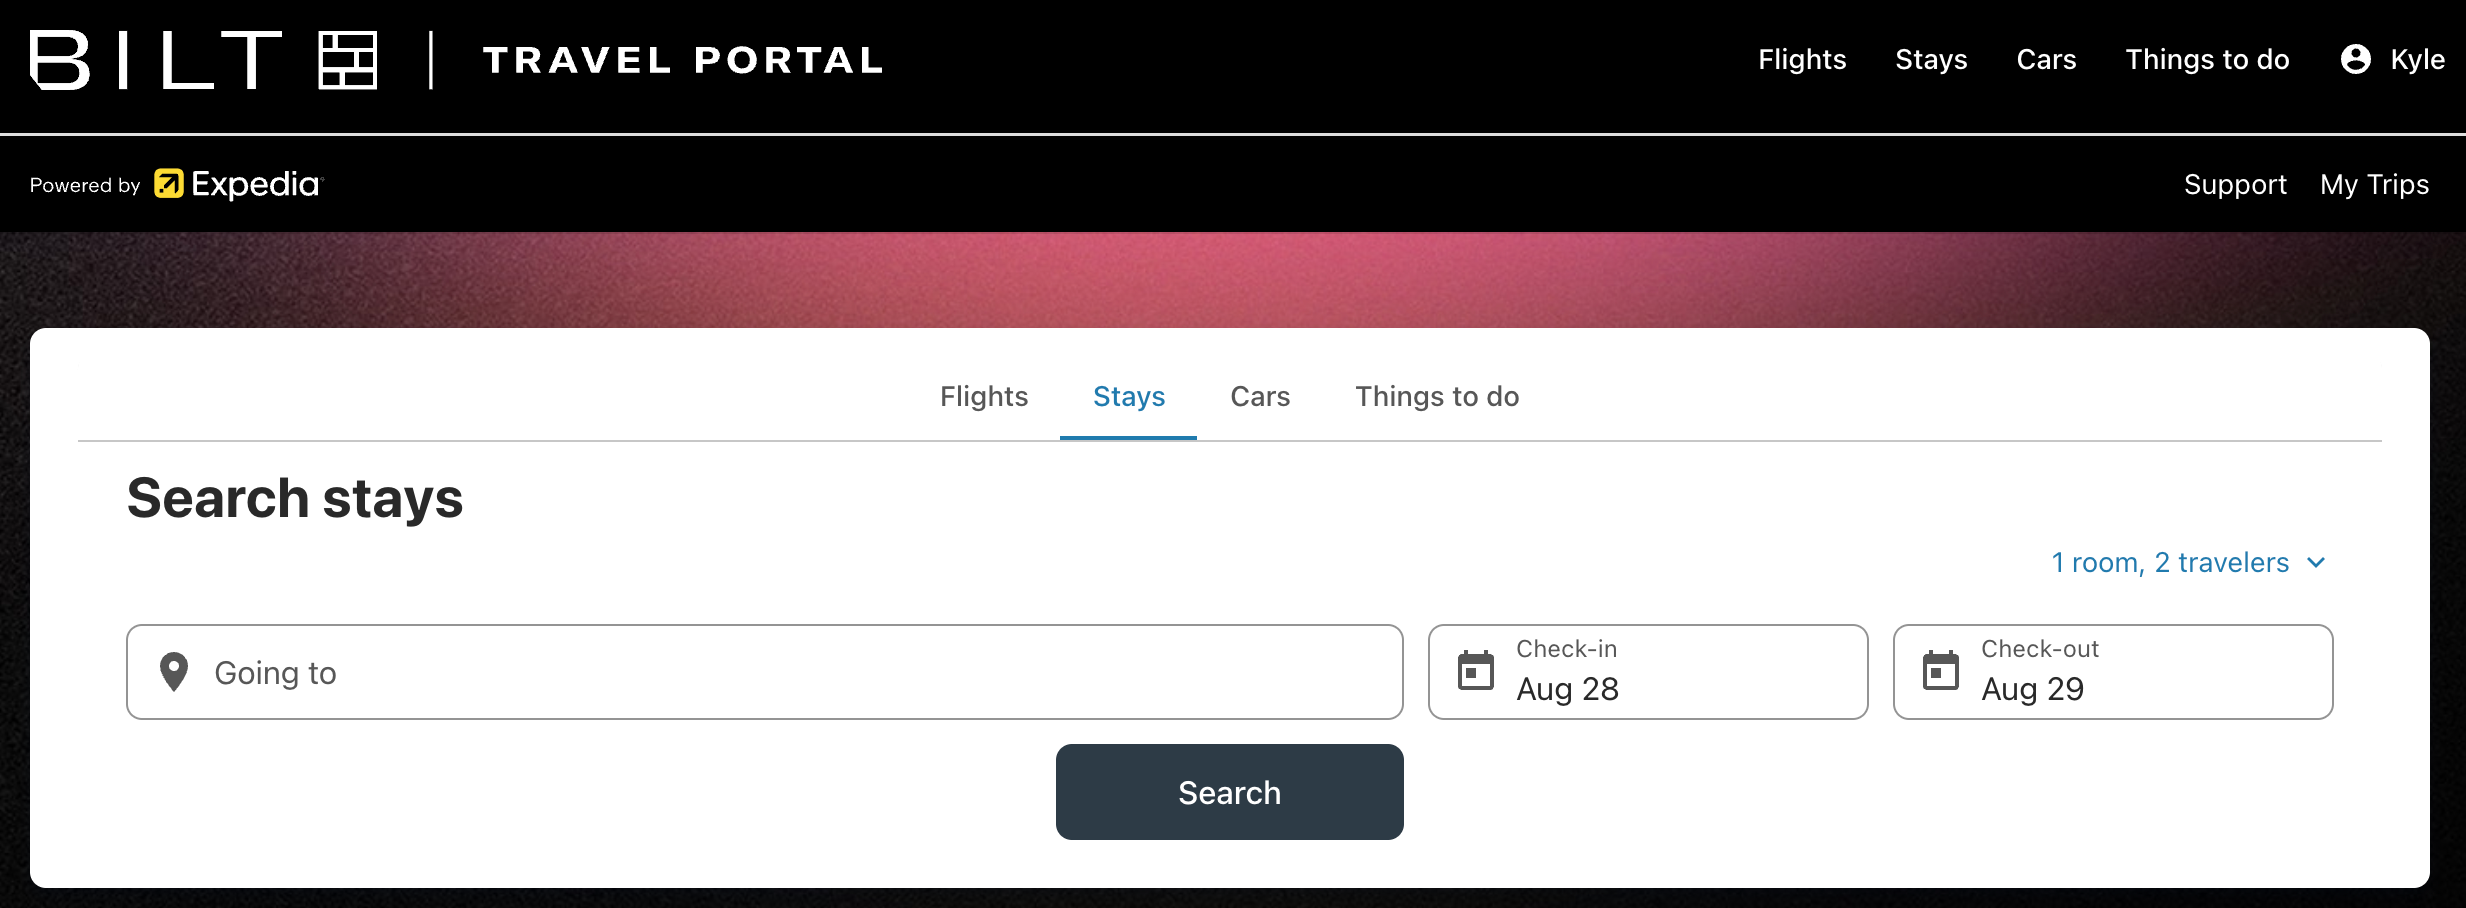 Bilt travel portal homepage